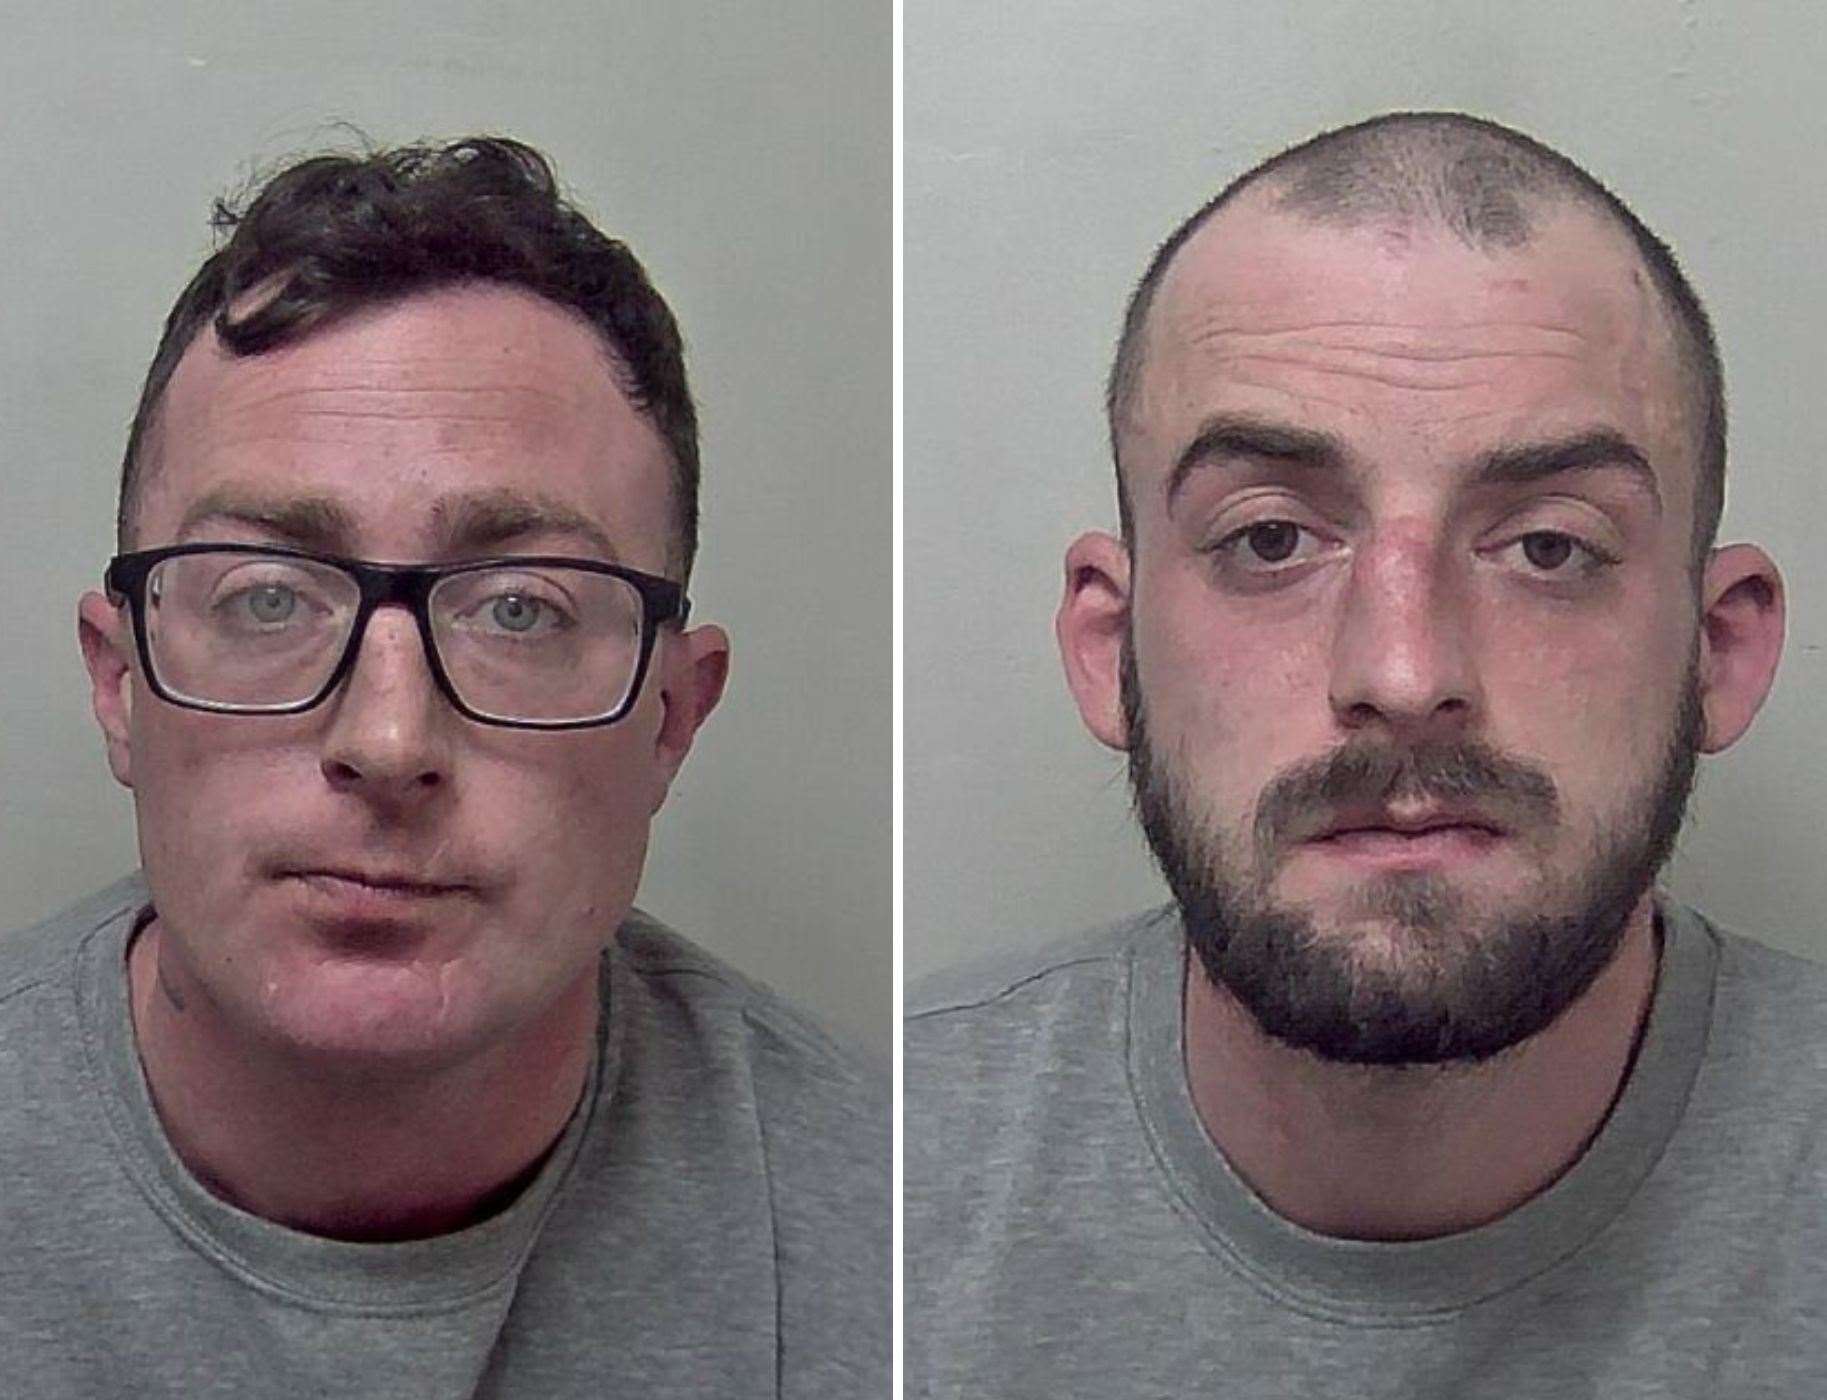 Luke Tudor and Kieran Martin have been jailed